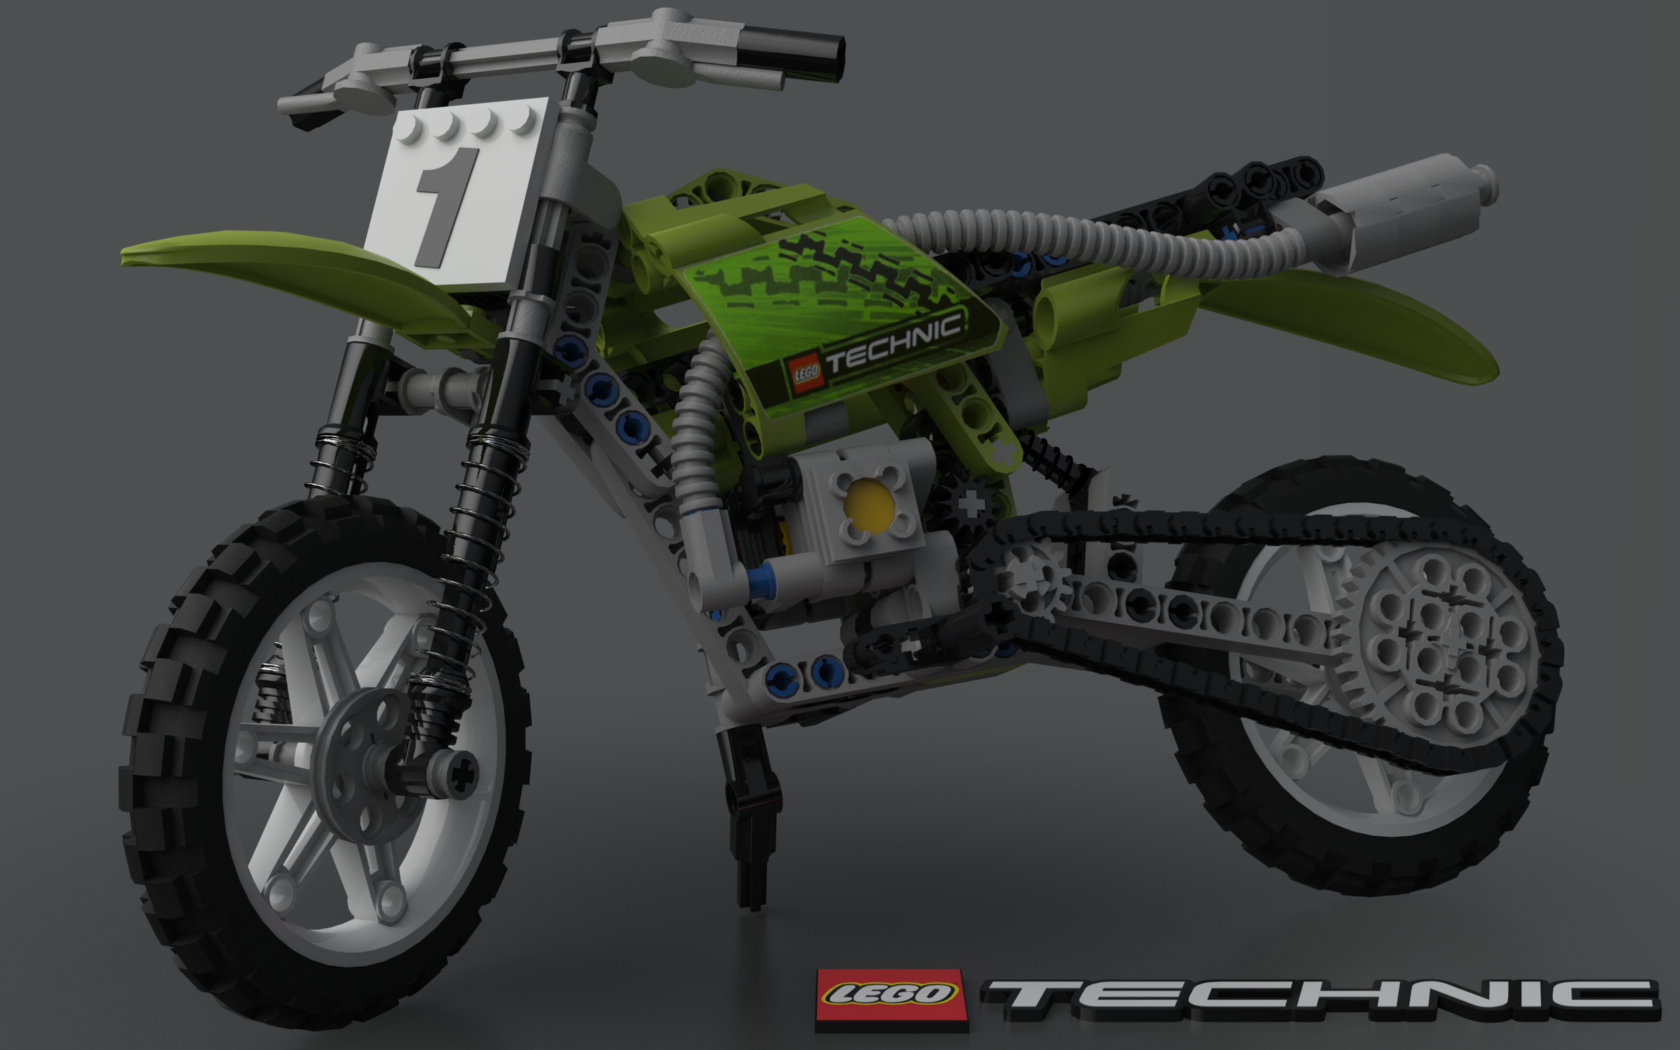 under rester Glorious LEGO TECHNIC Dirt Bike 8291 by Dracu-Teufel666 on DeviantArt